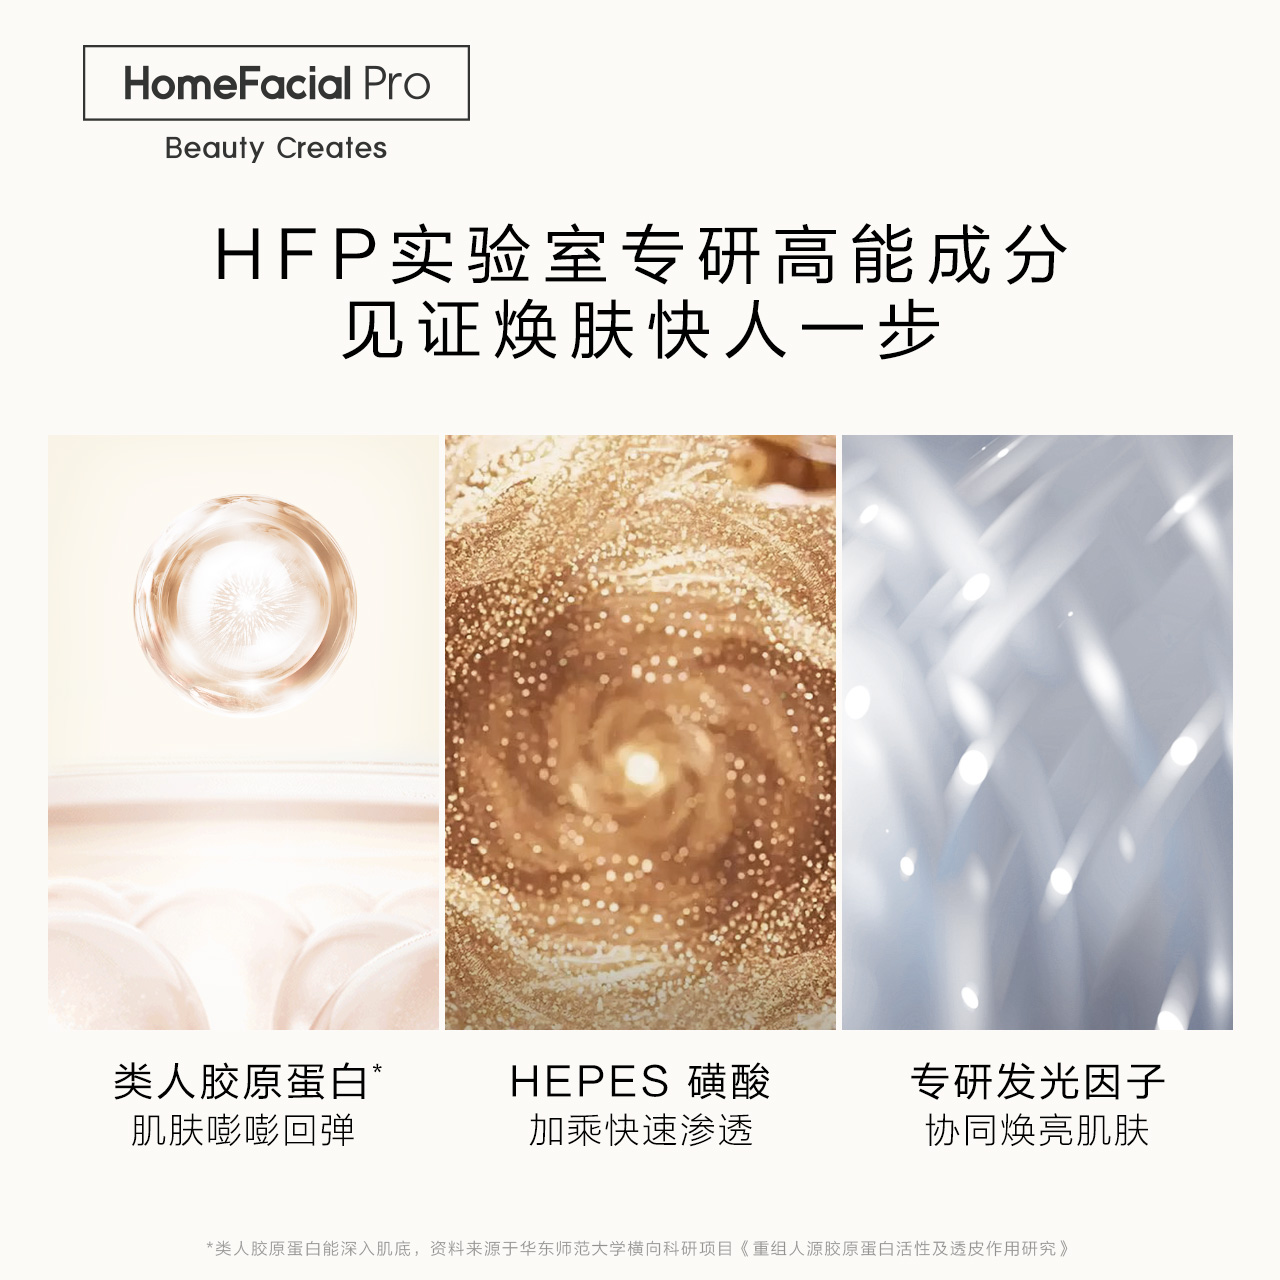 HFP磺酸膠原修護面膜 熬夜急救補水保濕塗抹式面膜